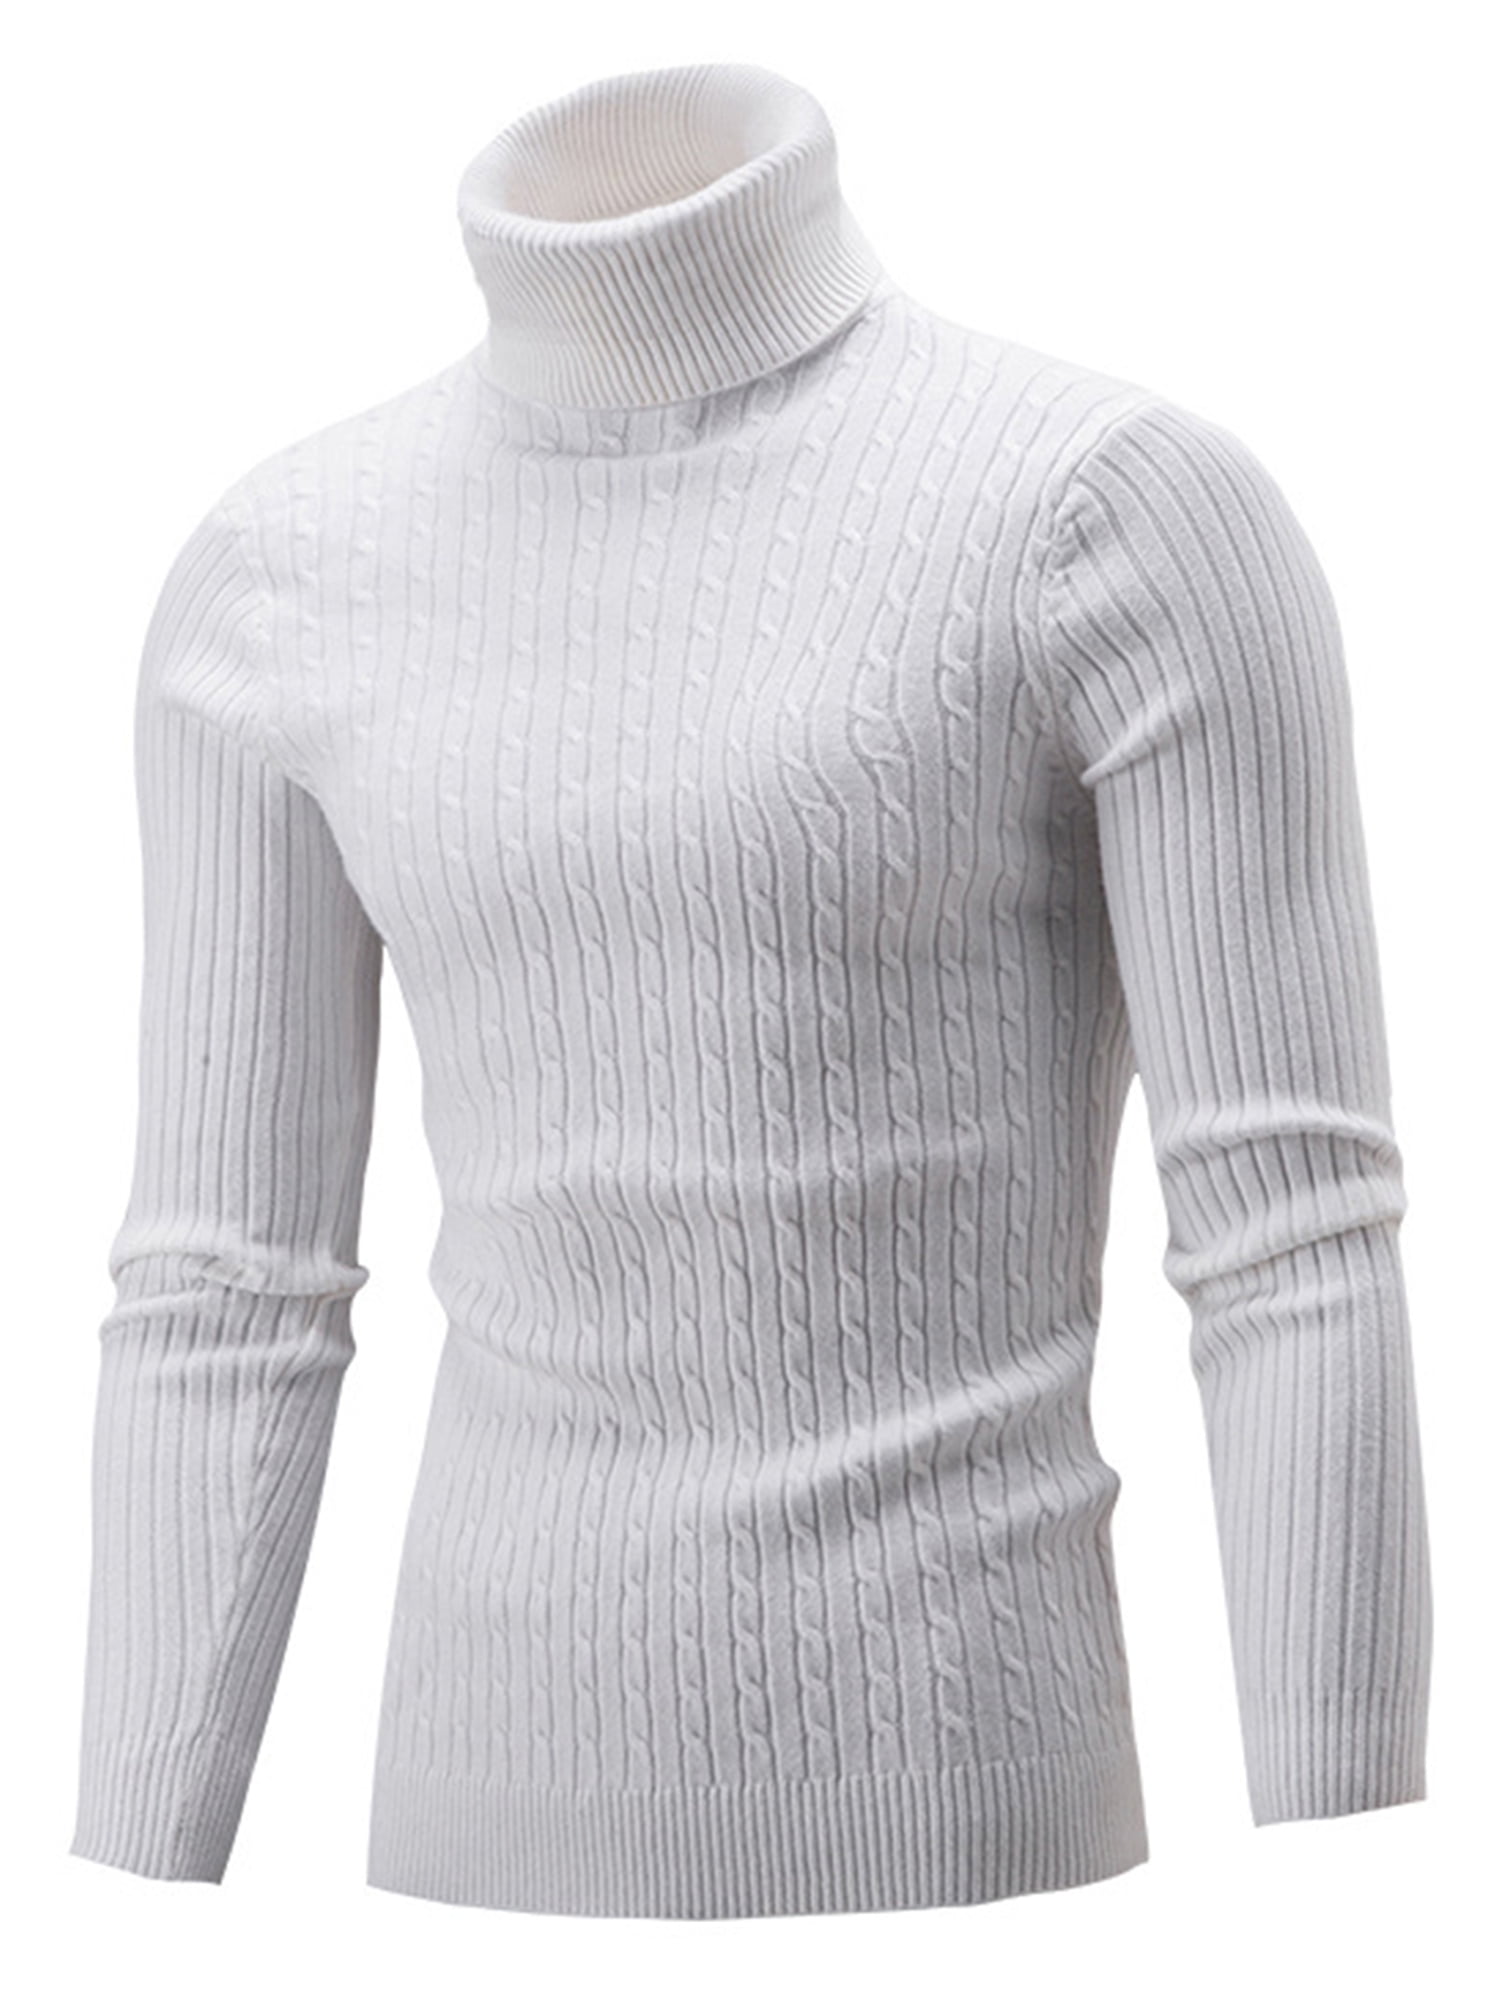 Tetyseysh Men Slim Fit Turtleneck Sweater Casual Twist Pattern Knitted ...